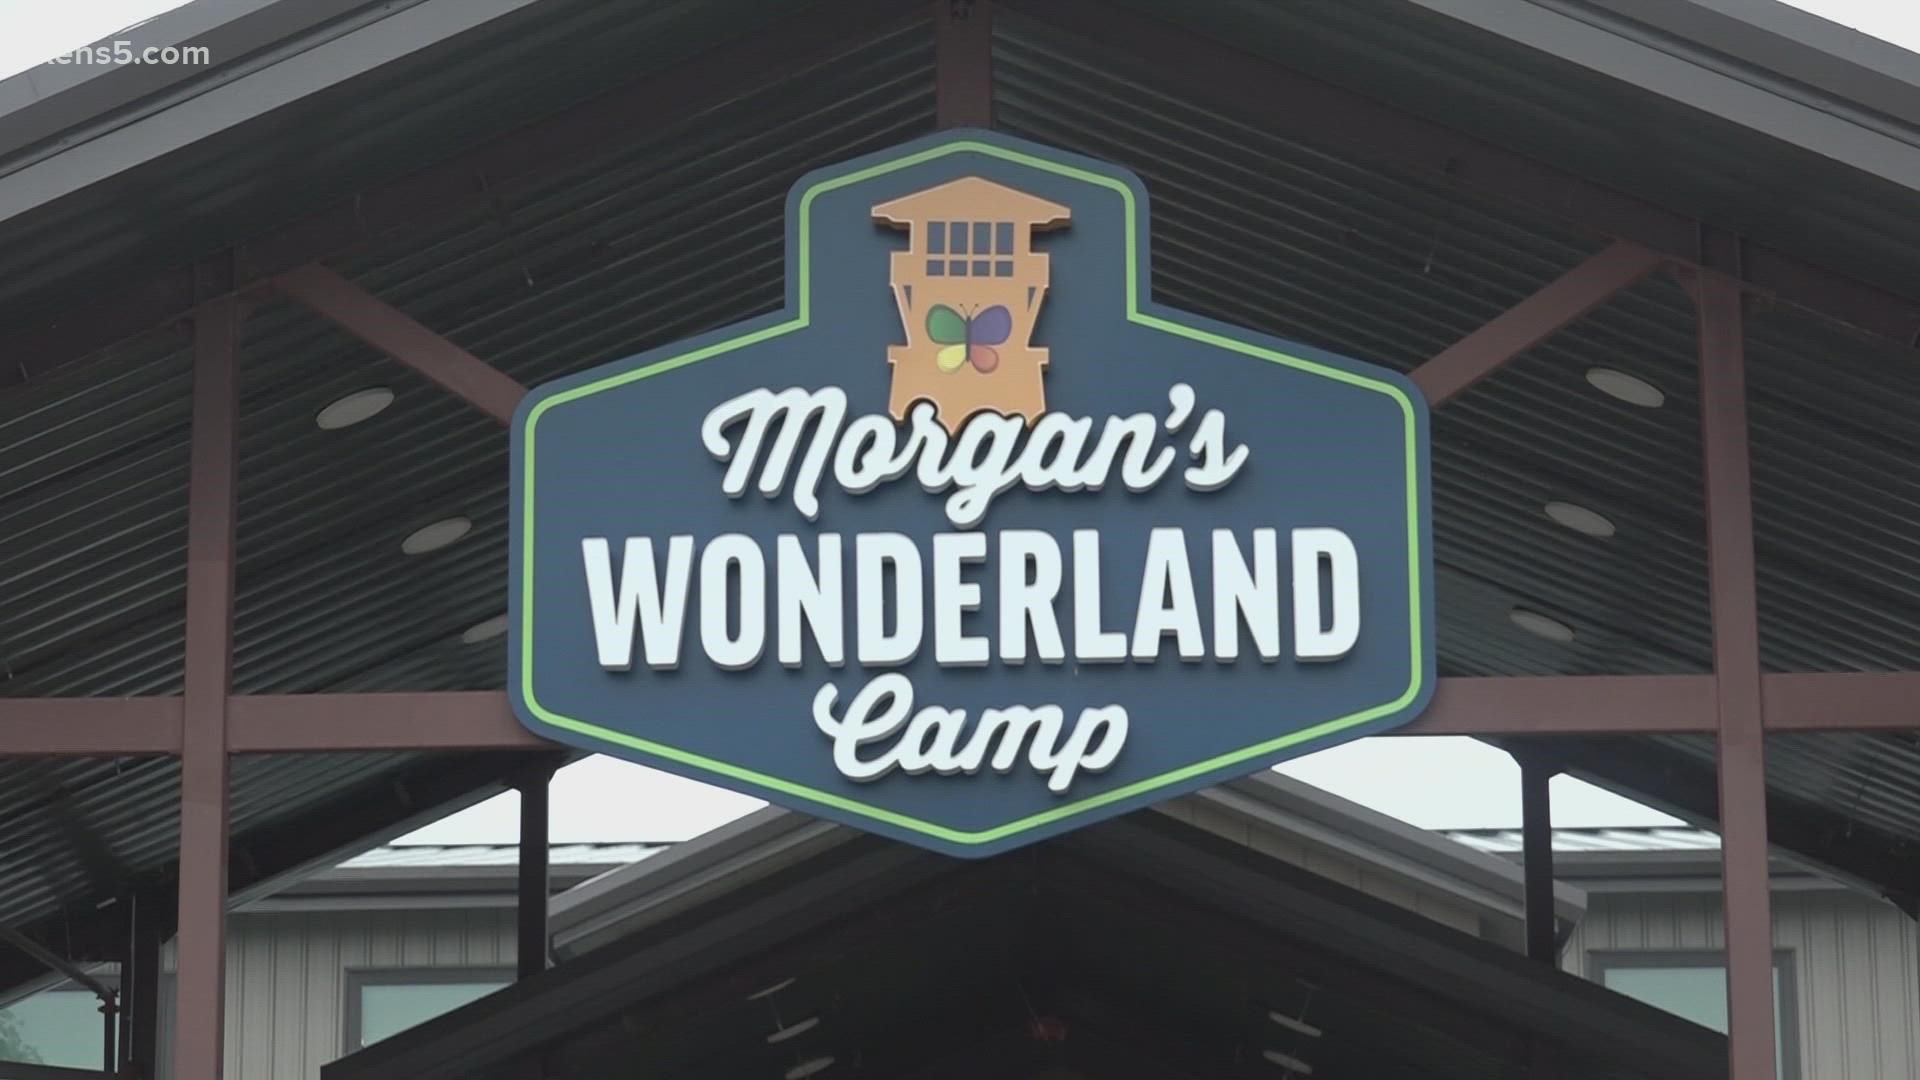 Wonderland prepares to open allinclusive summer camp in 2022